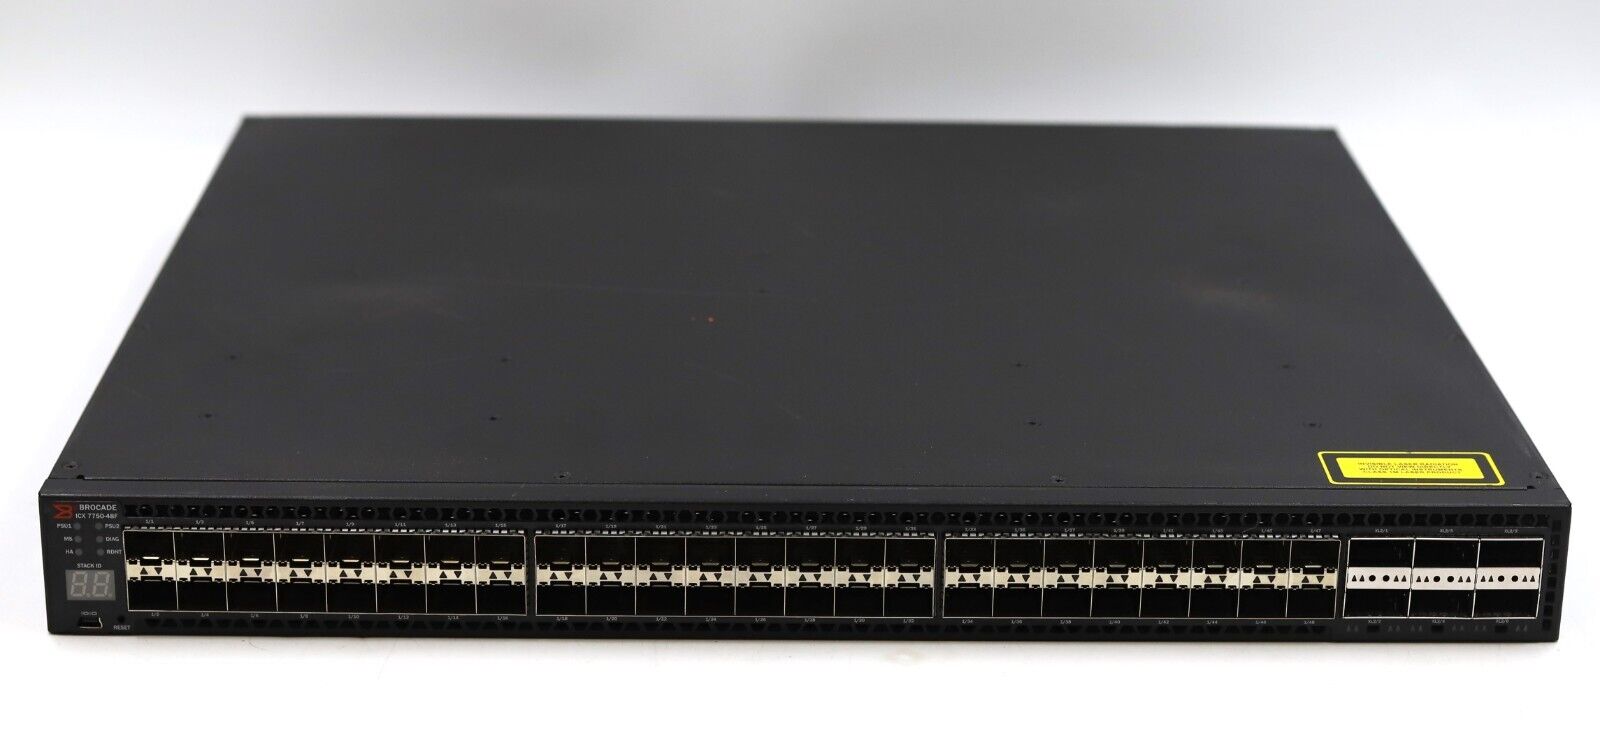 Brocade ICX 7750-48F 48-Port 10GbE SFP+ 6x40GbE QSFP+ Switch P/N: ICX7750-48F